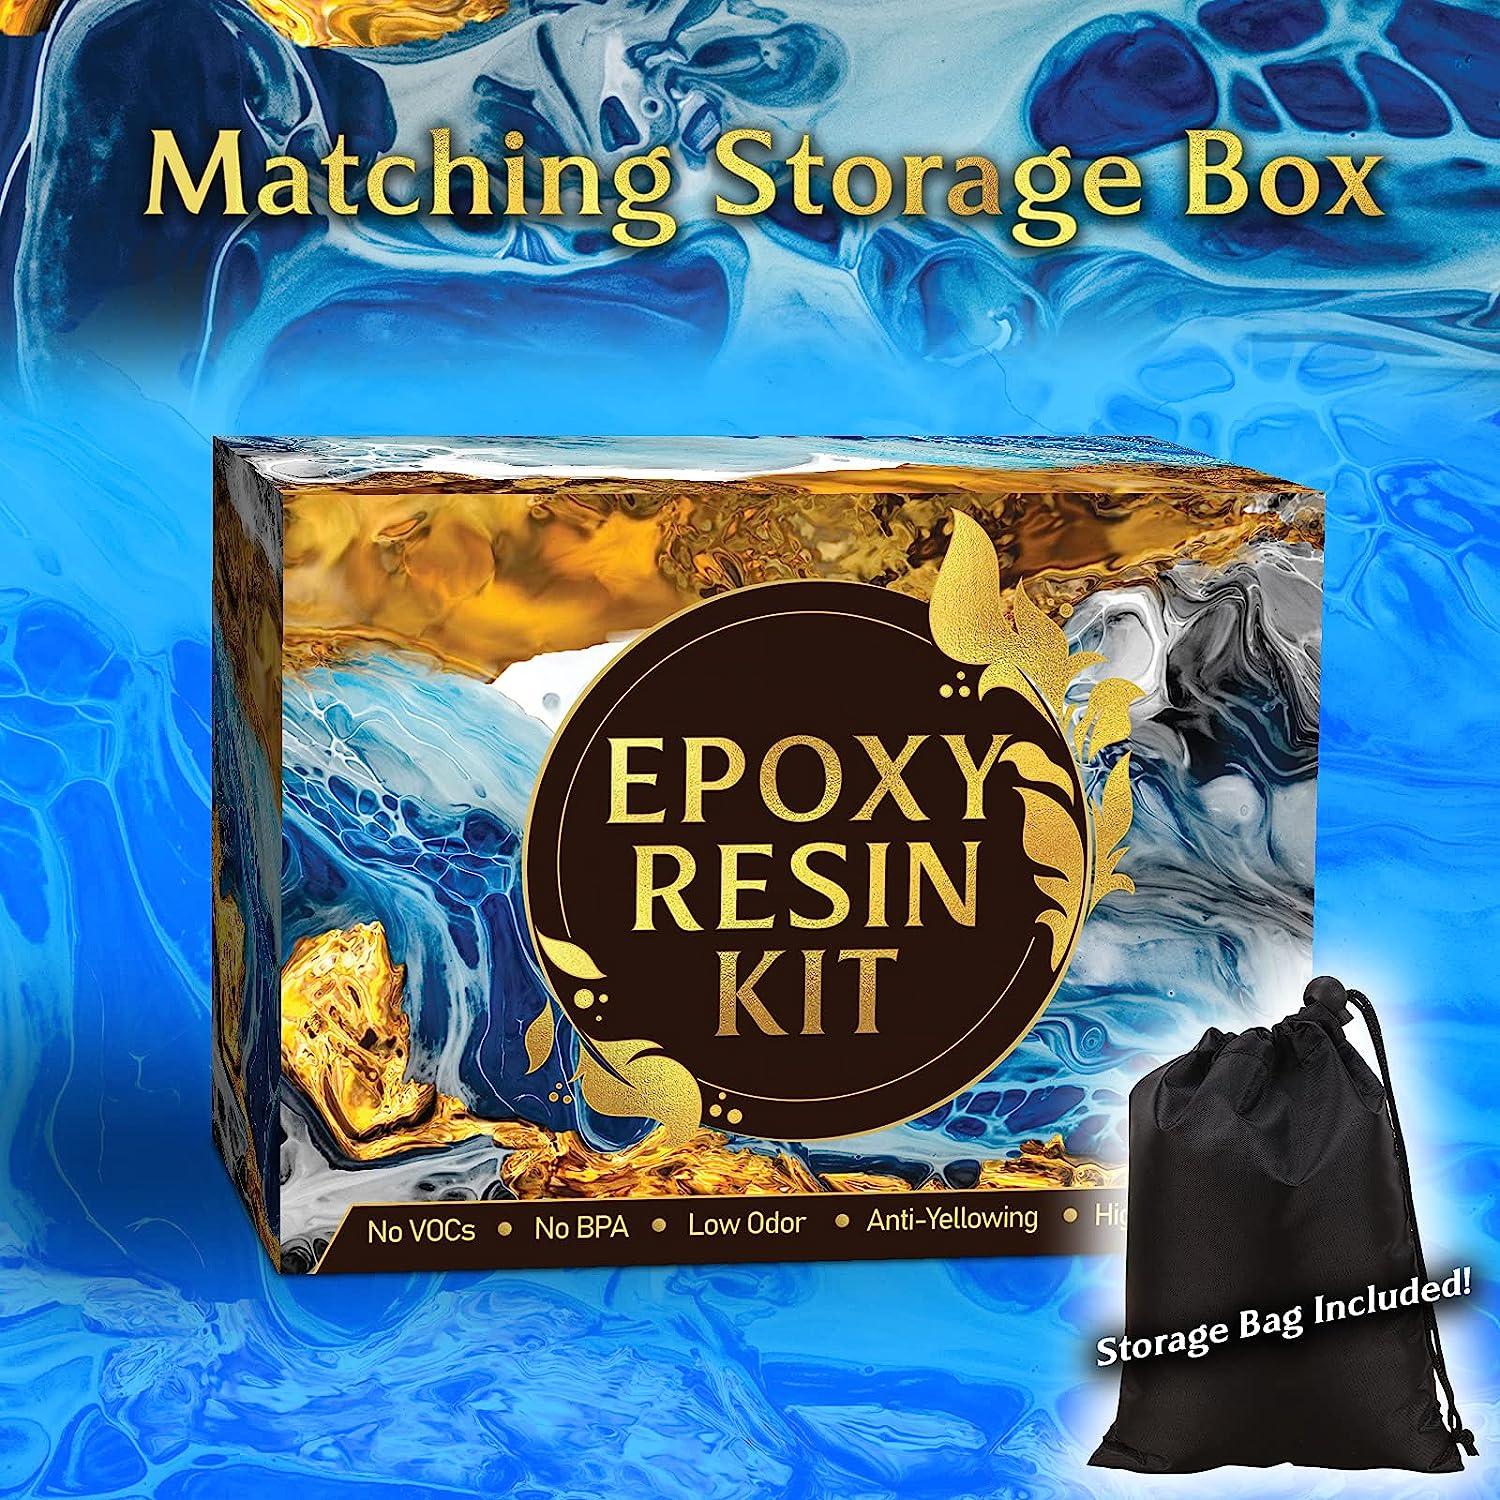 Transparent Epoxy Resin Molds Set Silicone Molds For Epoxy Resin Kit  Silicone Moule For Jewelry Making DIY Craft Art Supplies